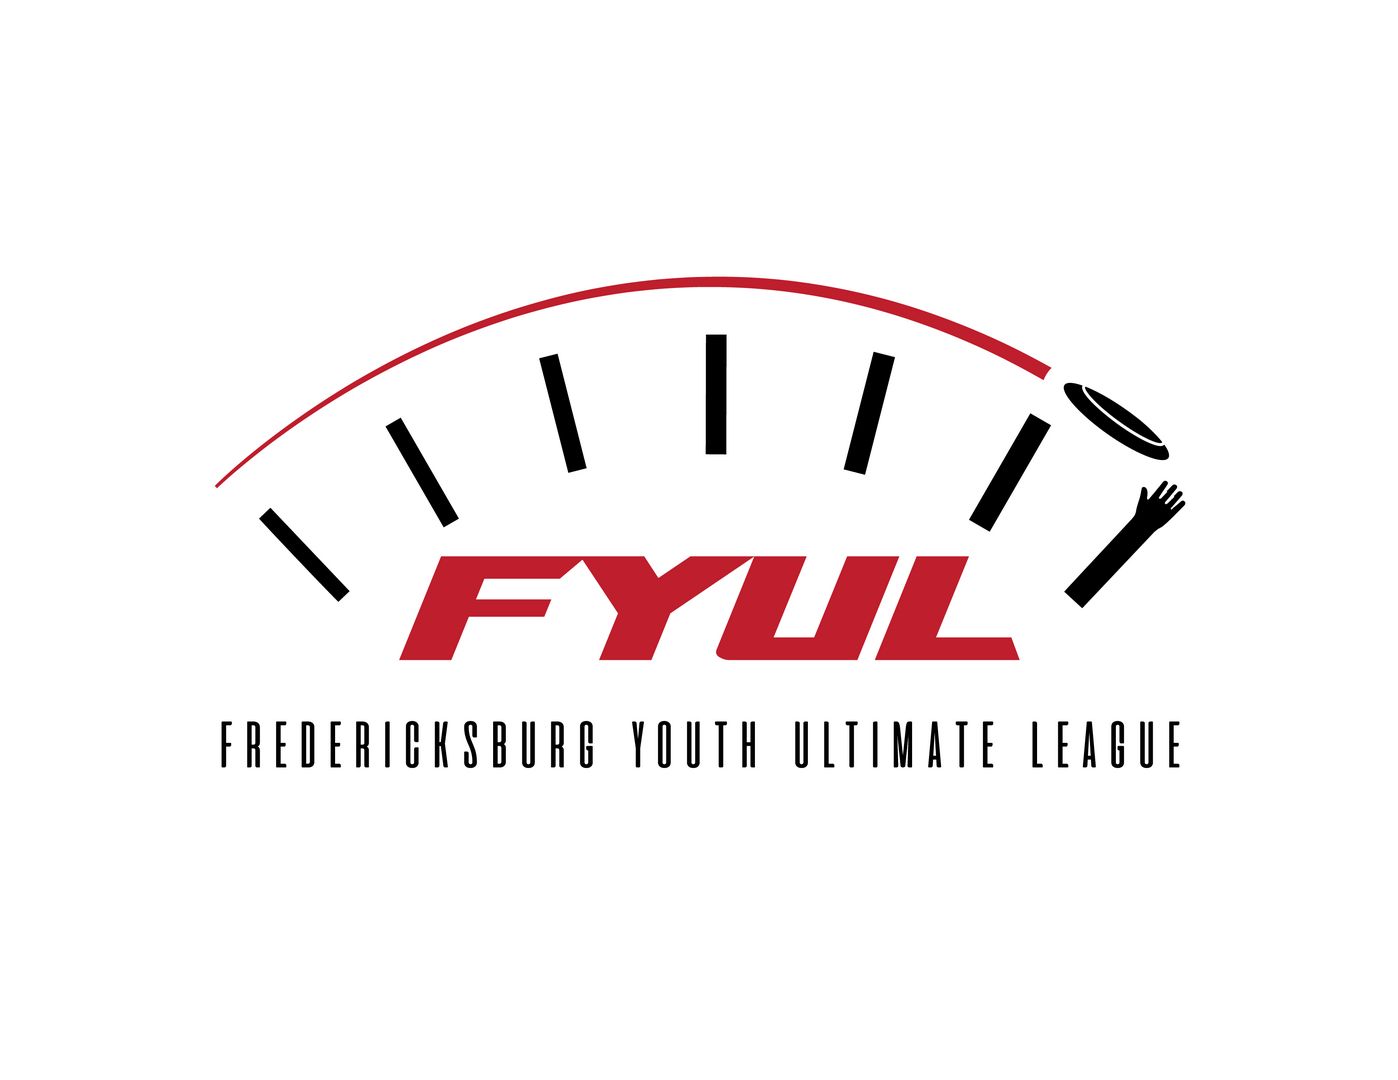 Fredericksburg Youth Ultimate League, Fredericksburg City, Virginia, United States